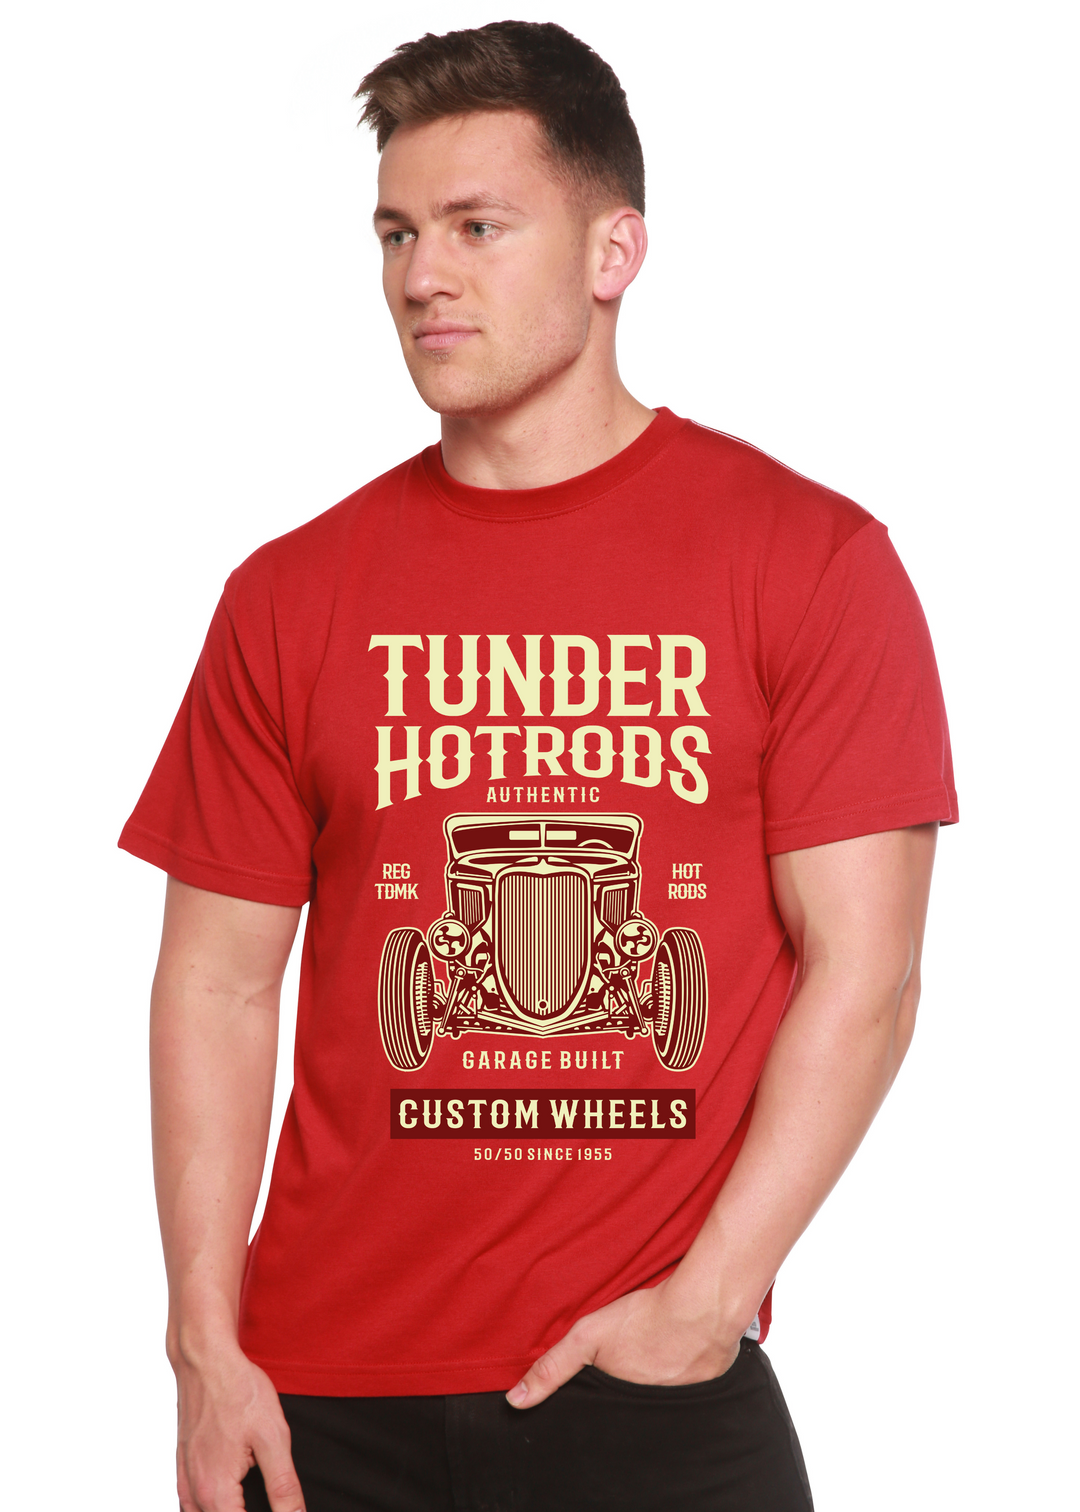 Thunder Hot men's bamboo tshirt pompeian red